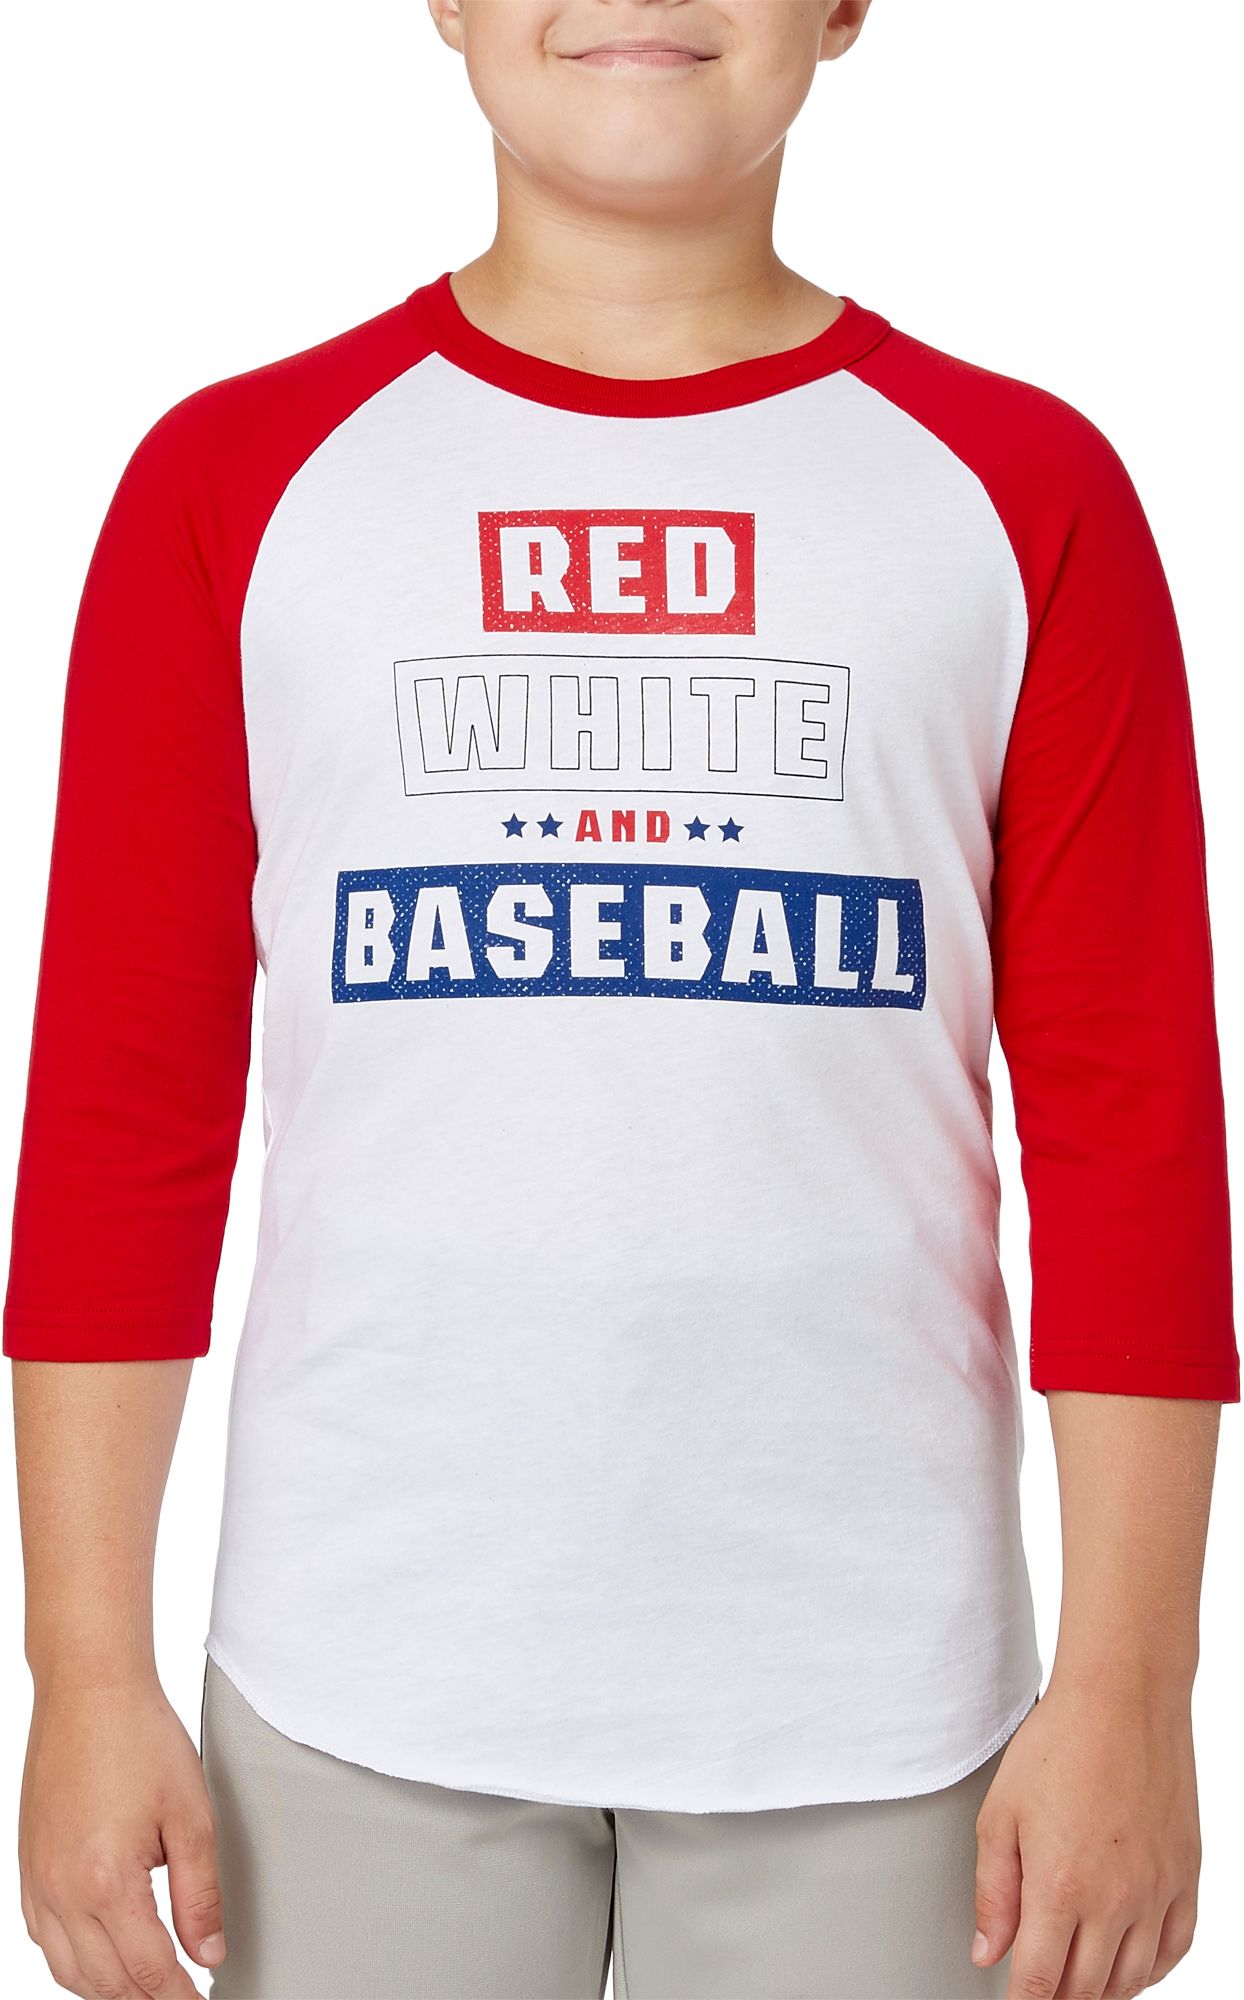 red white baseball shirt